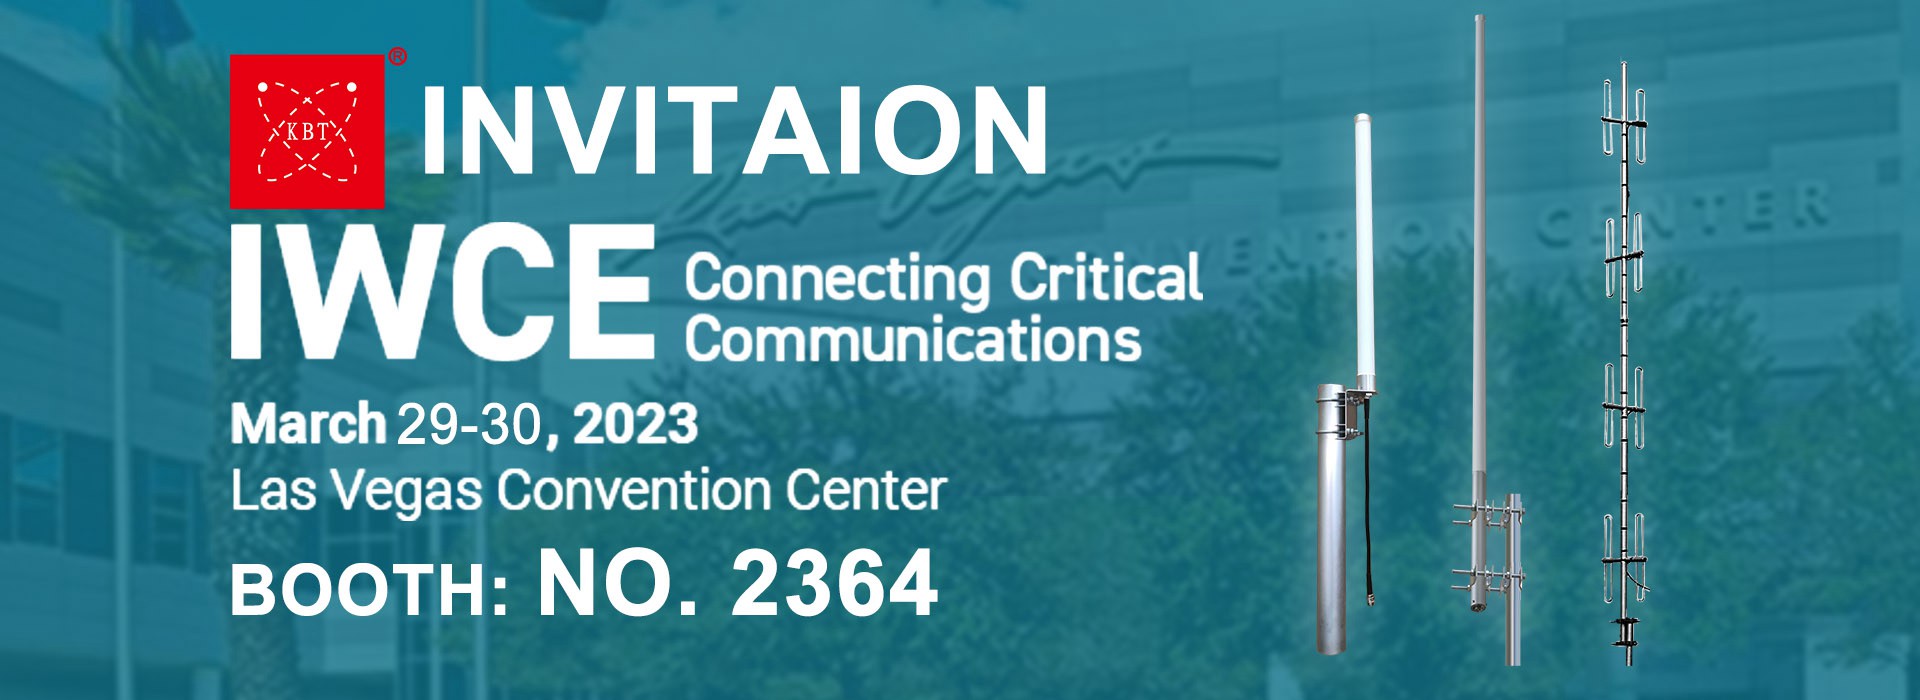 INVITAION-IWCE2023(International Wireless Communications Expo)